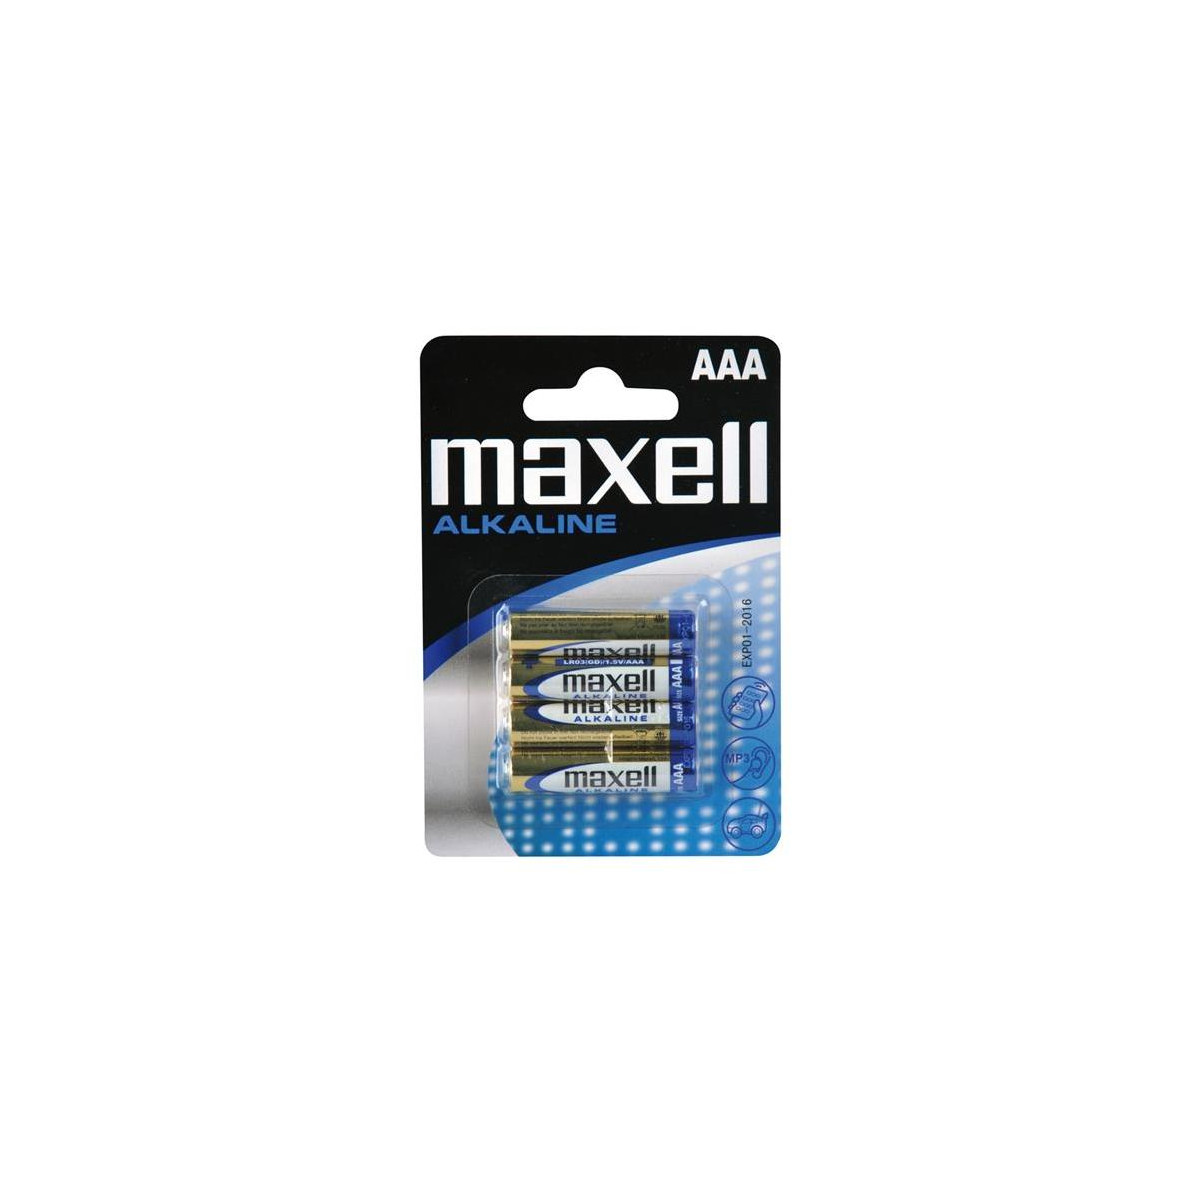 More about Baterie AAA (R03) alkalická MAXELL 4ks / blistr